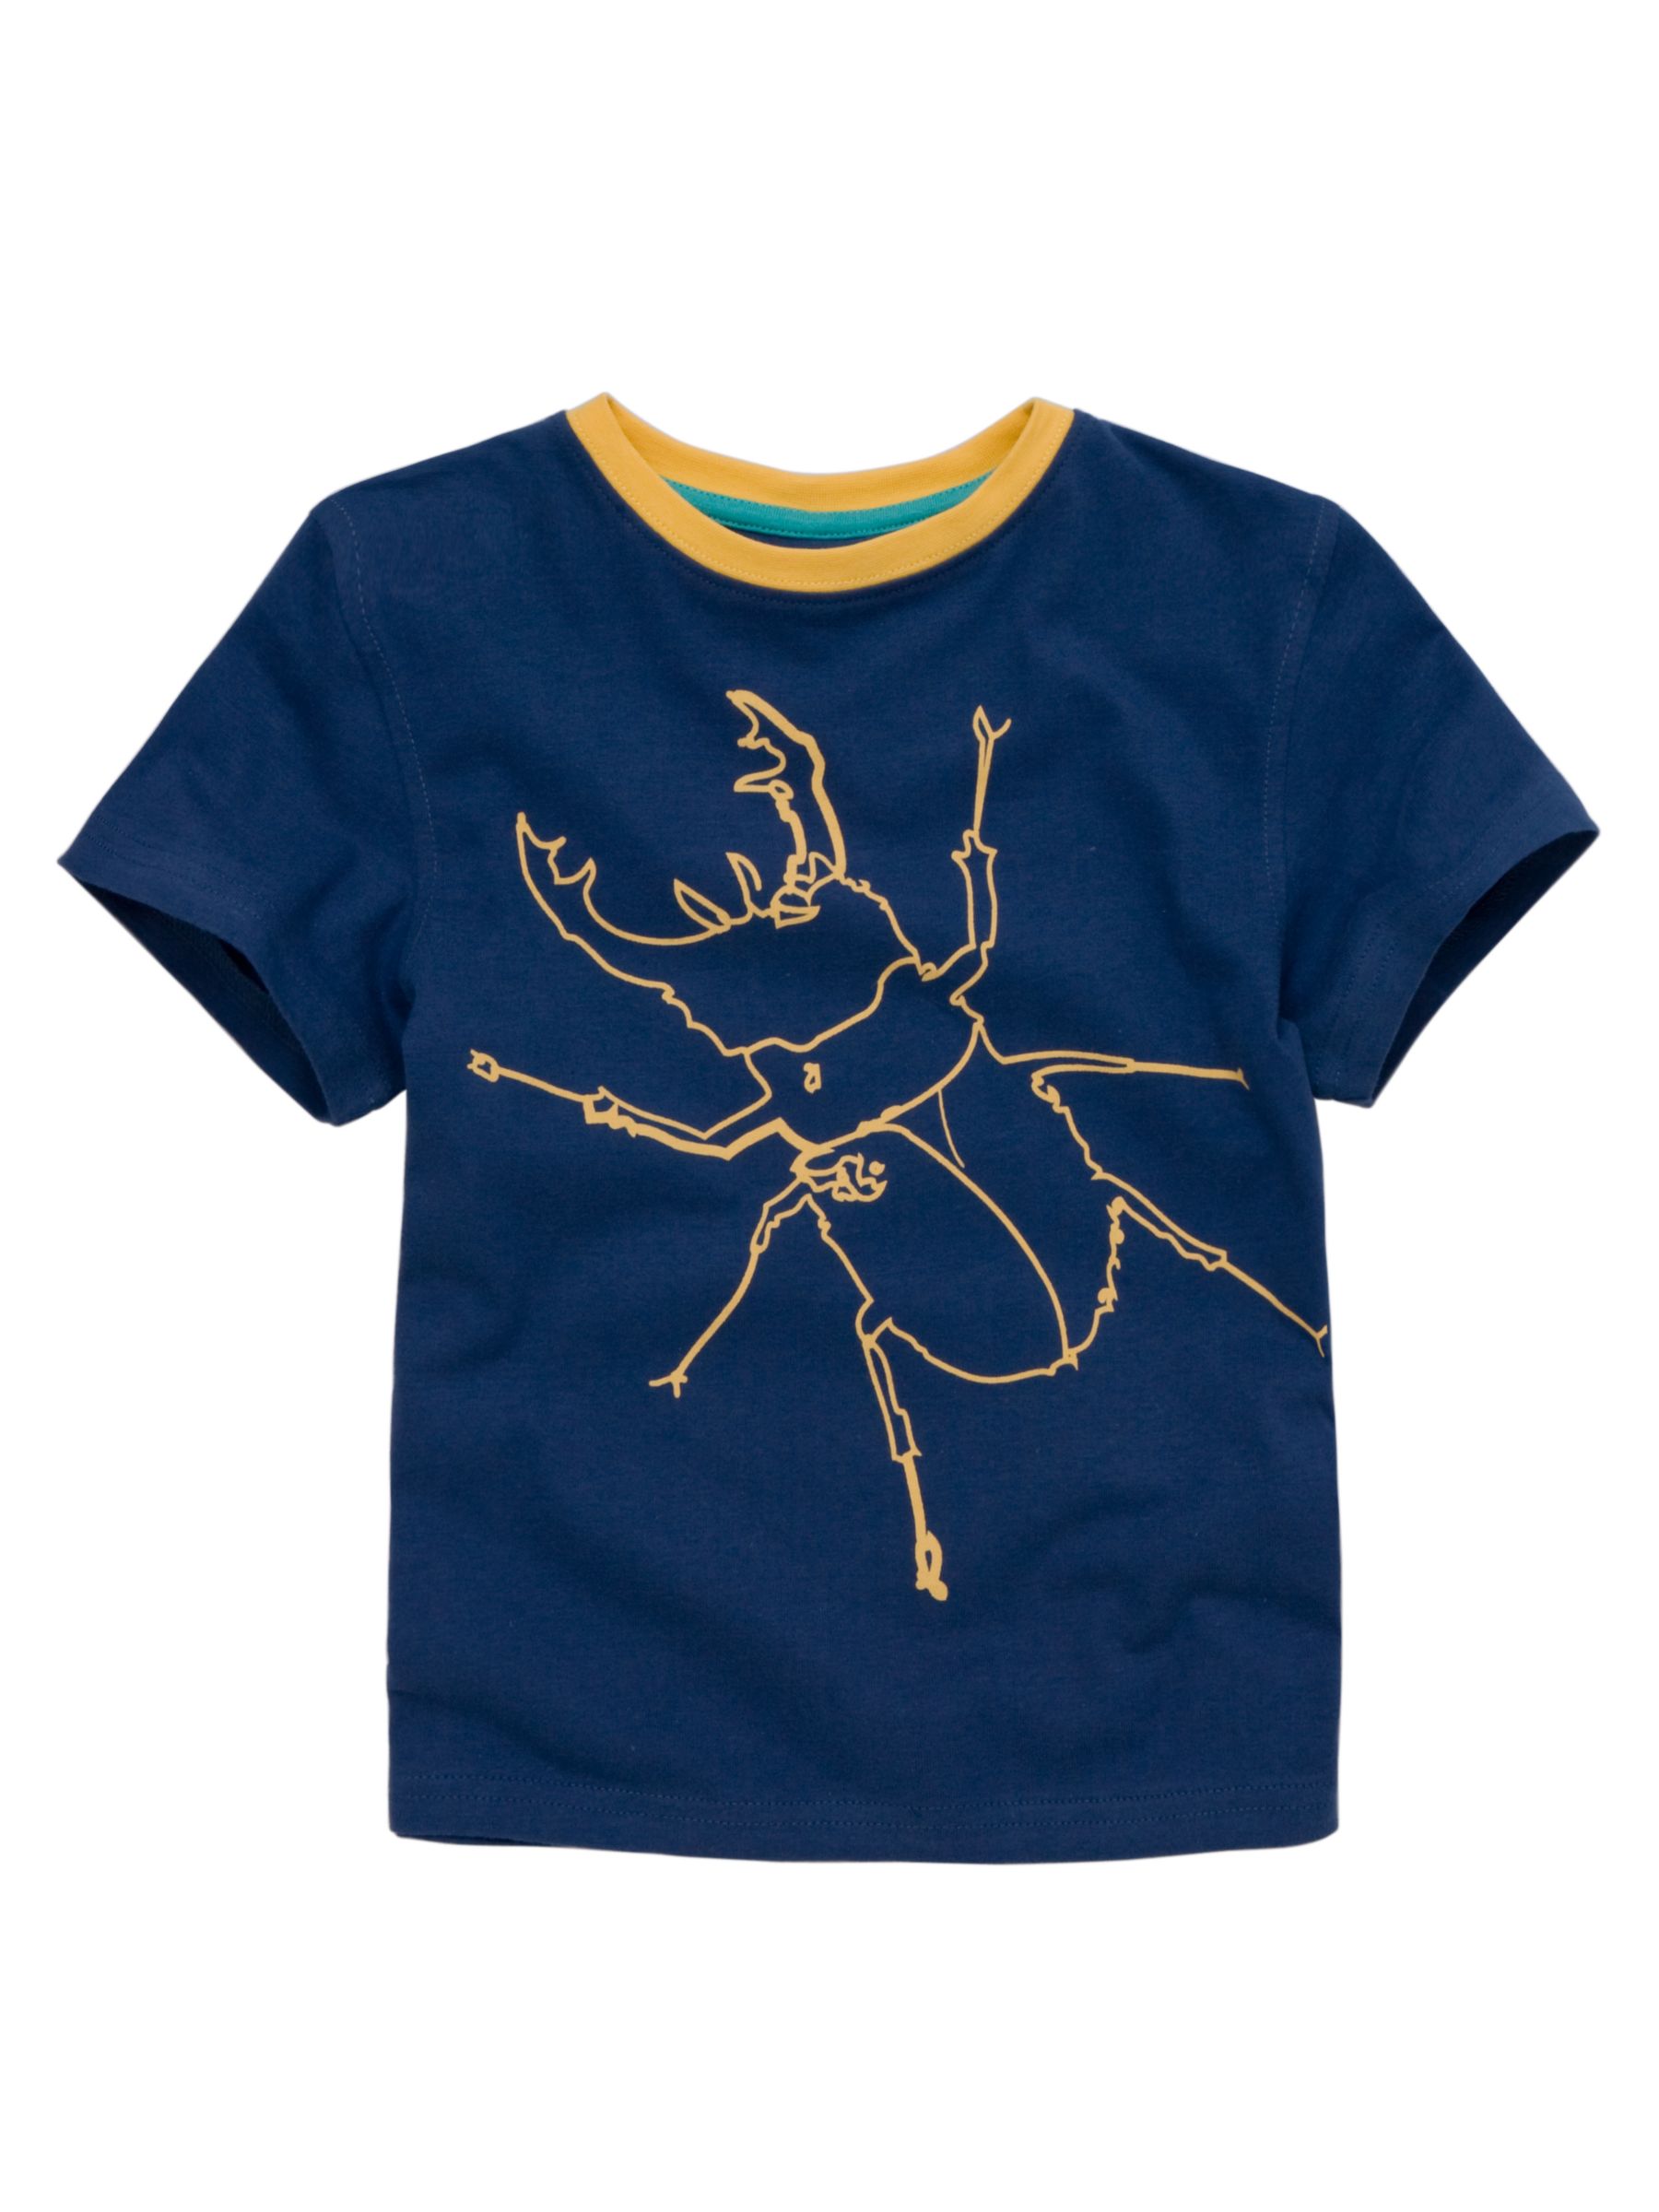 John Lewis Boy Beetle T-Shirt, Navy blue, 4 years